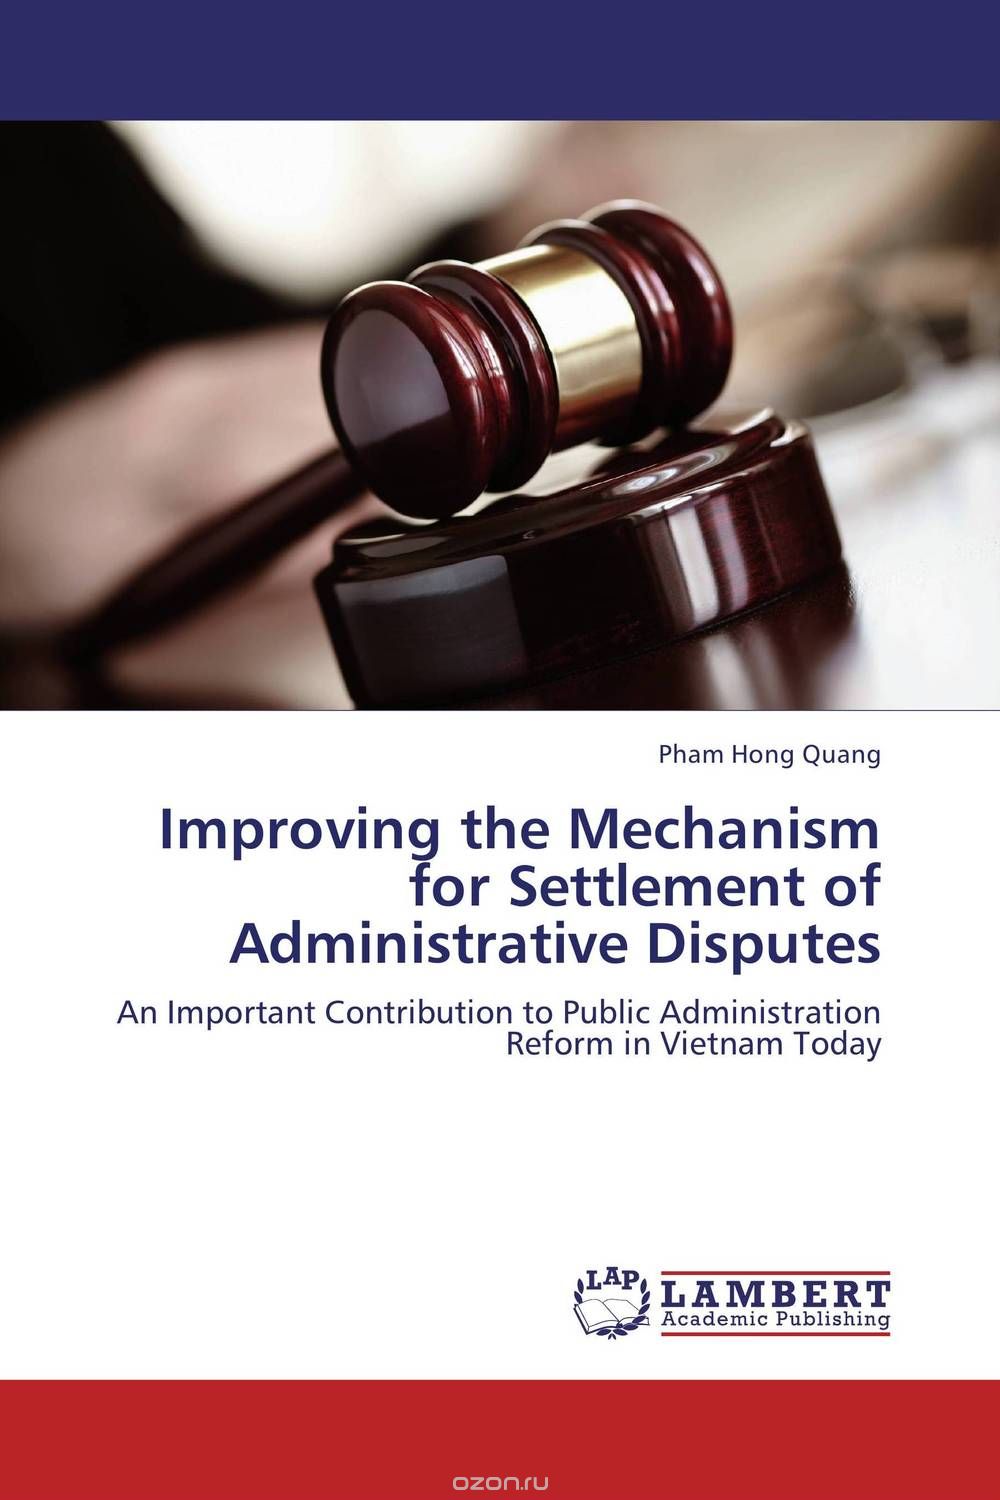 Скачать книгу "Improving the Mechanism for Settlement of Administrative Disputes"